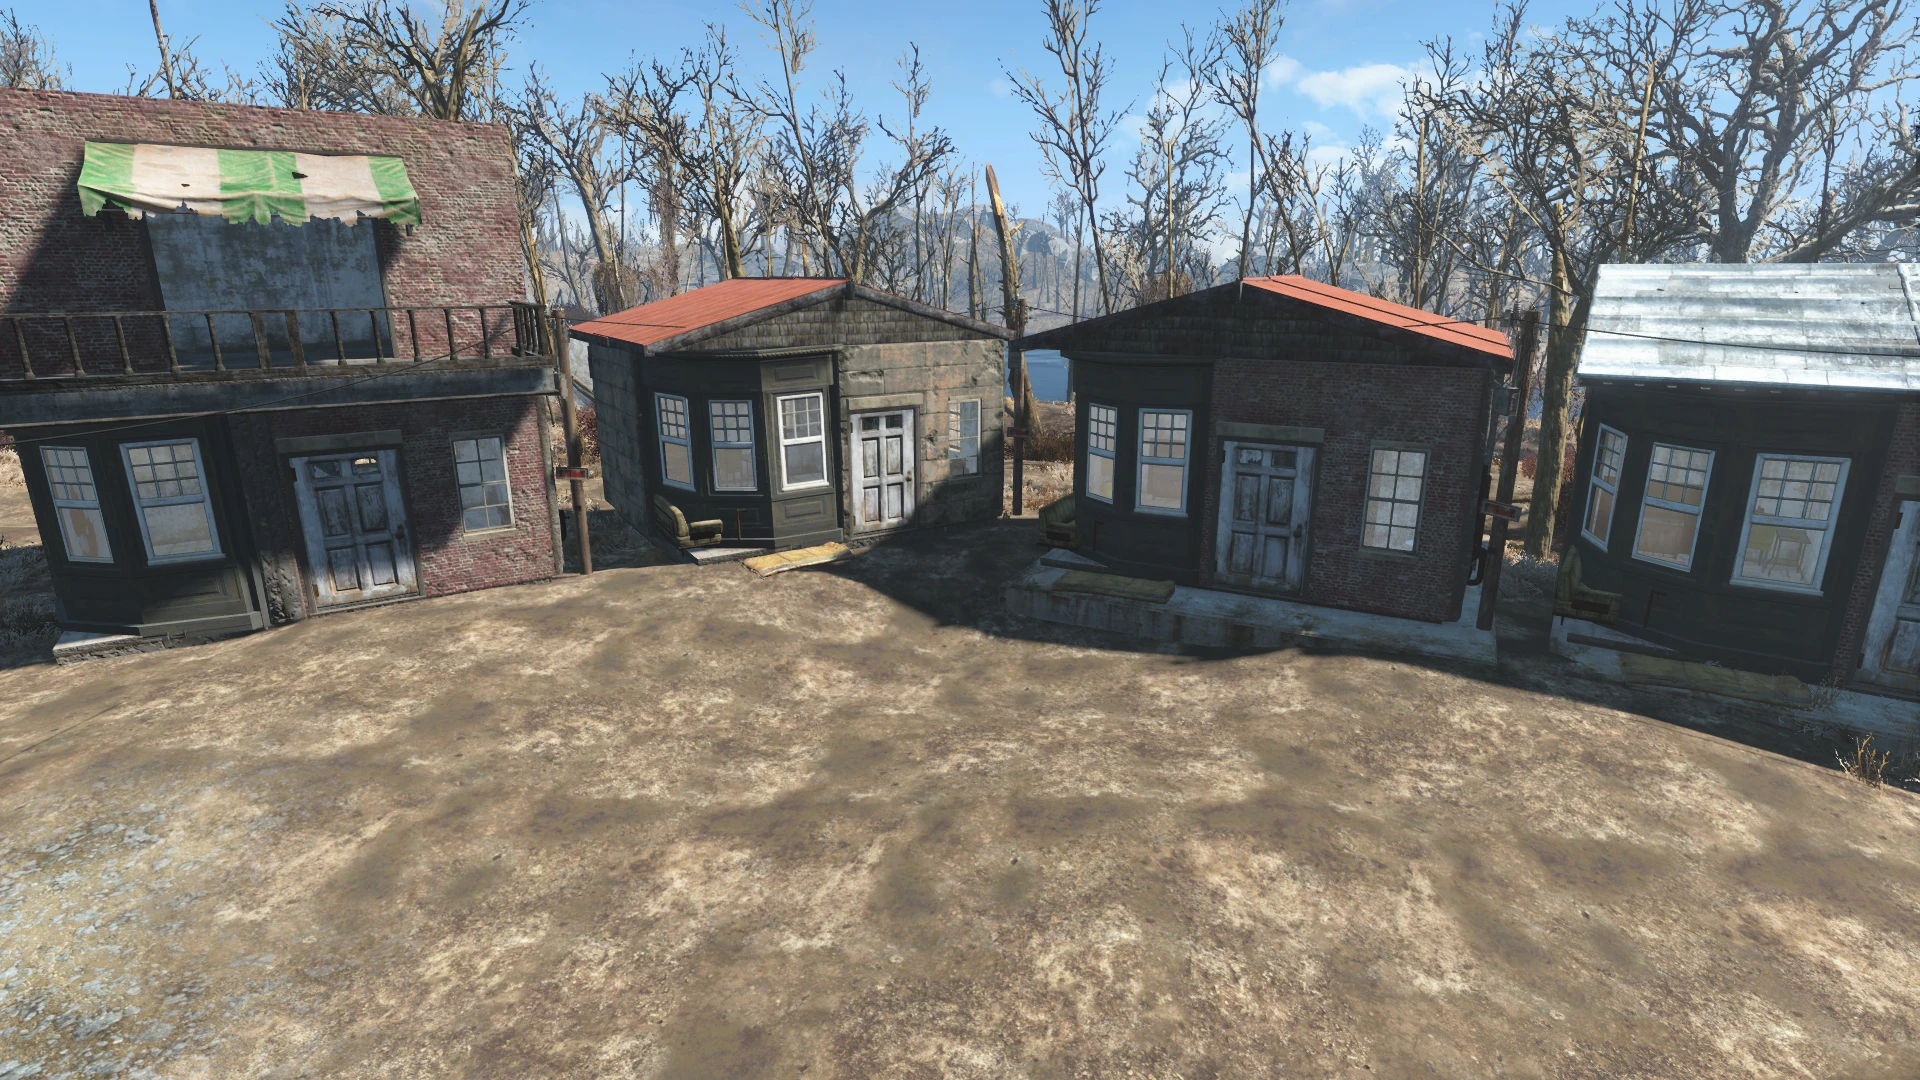 Fallout 4 sim settlement 2 chapter 2 фото 110